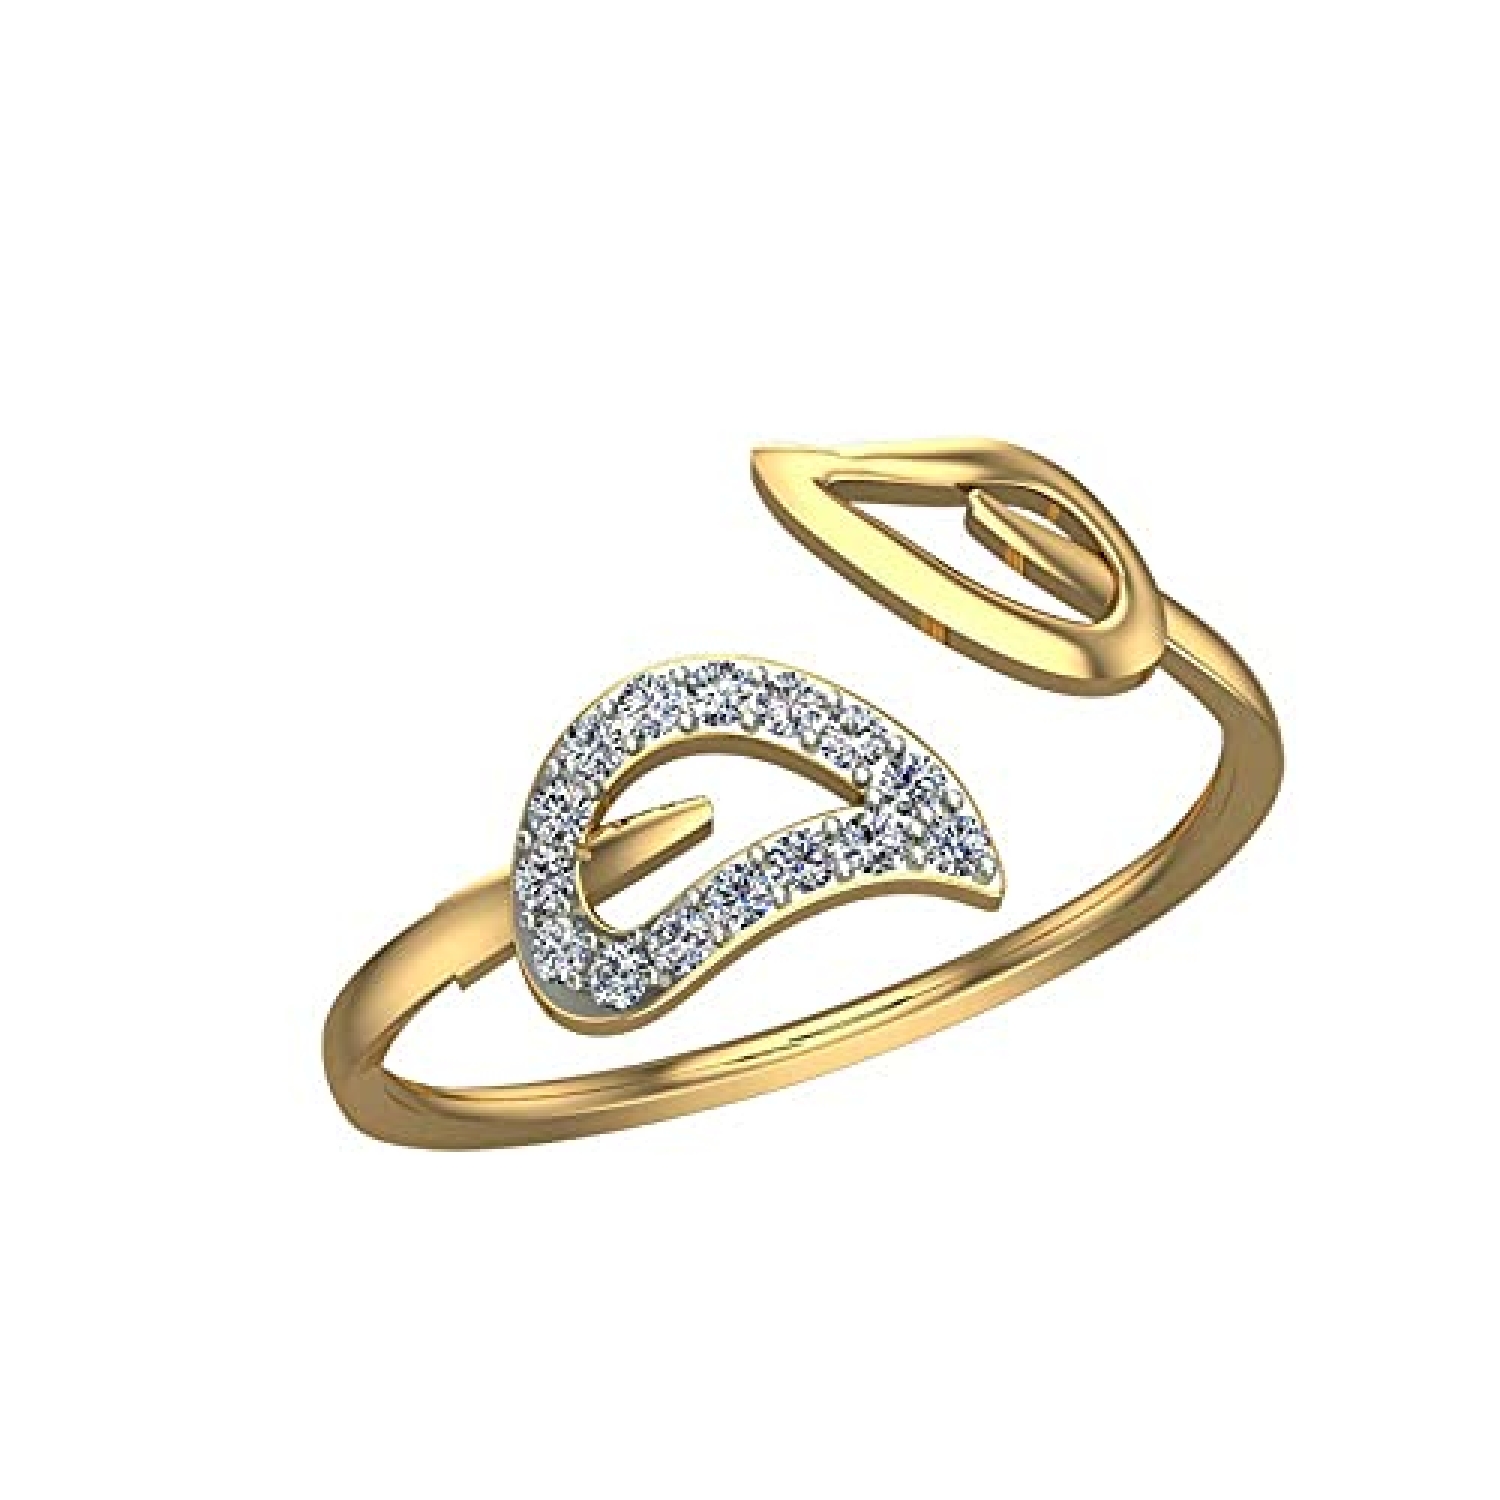 Yael Designs Pink Zircon Ring 18KR 200-22969 - London Gold